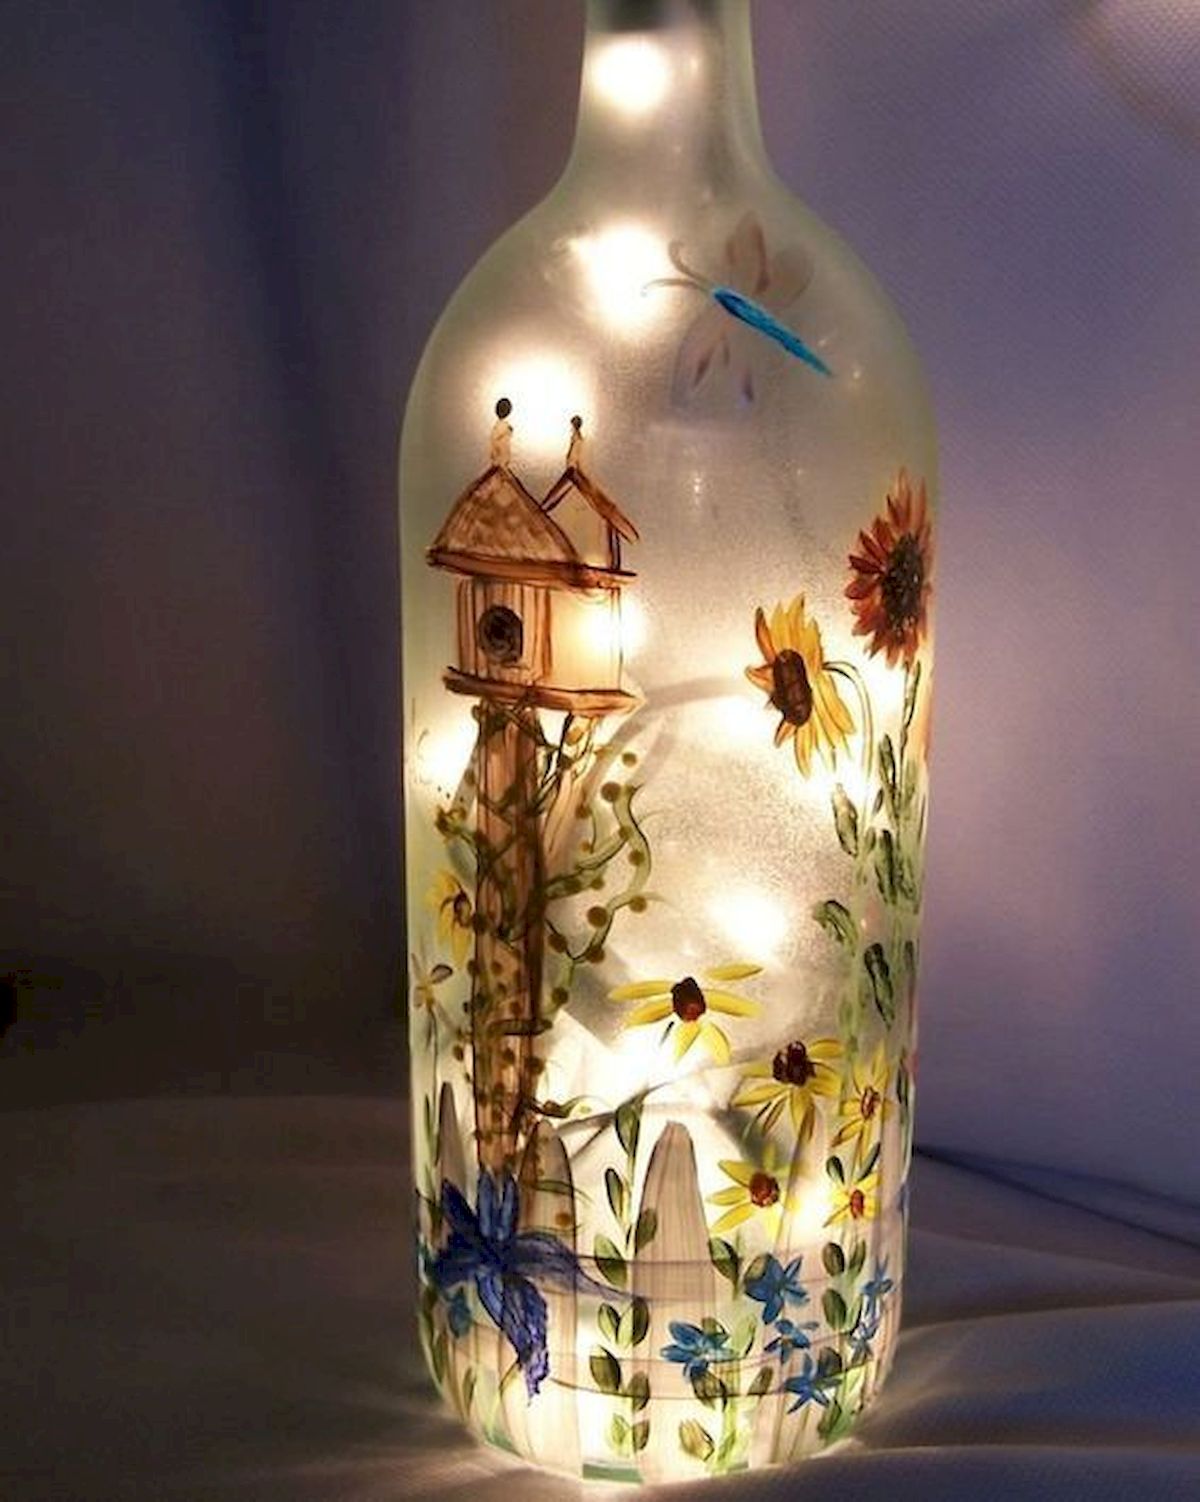 40 Fantastic DIY Wine Bottle Crafts Ideas With Lights (26)